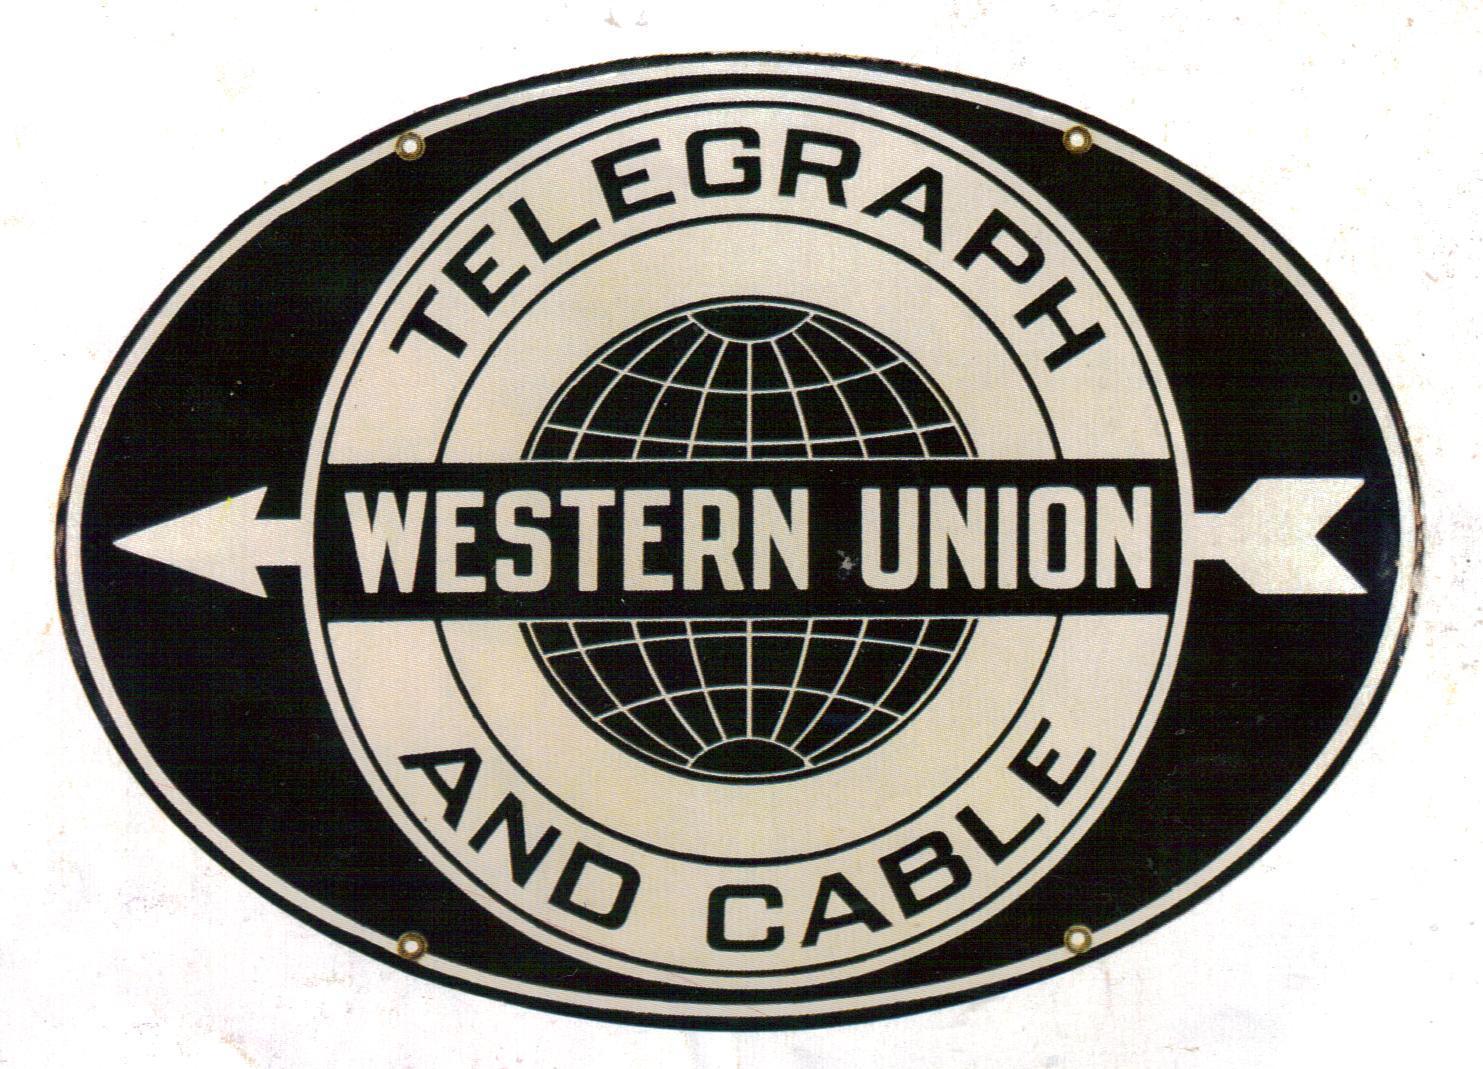 Old Western Union Logo - Pictures of Western Union Telegram Logo - kidskunst.info